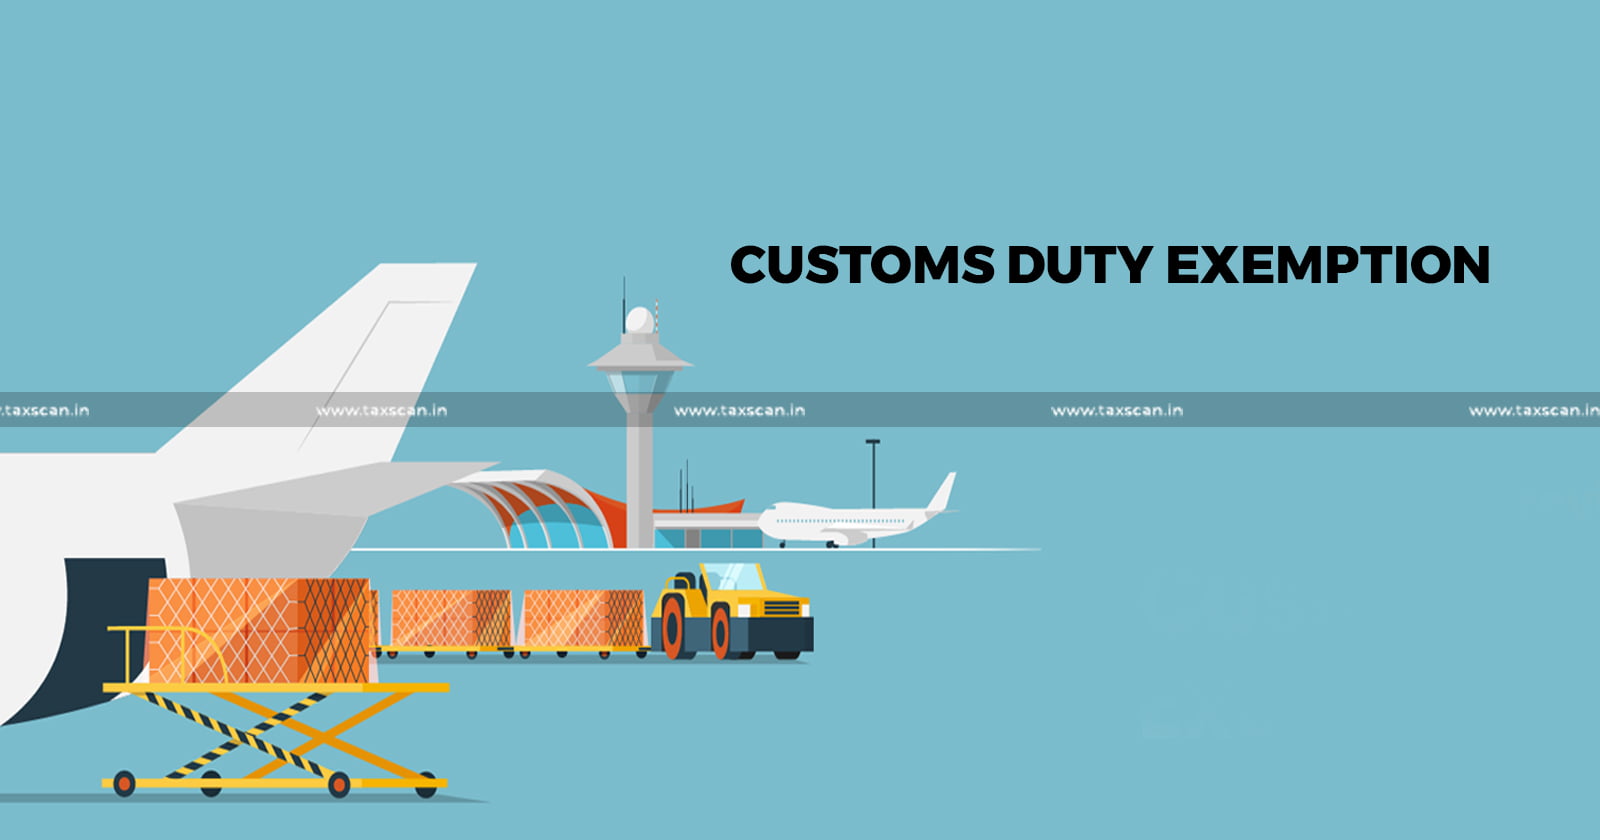 Customs authorities - Customs duty - CESTAT - customs duty exemption - taxscan